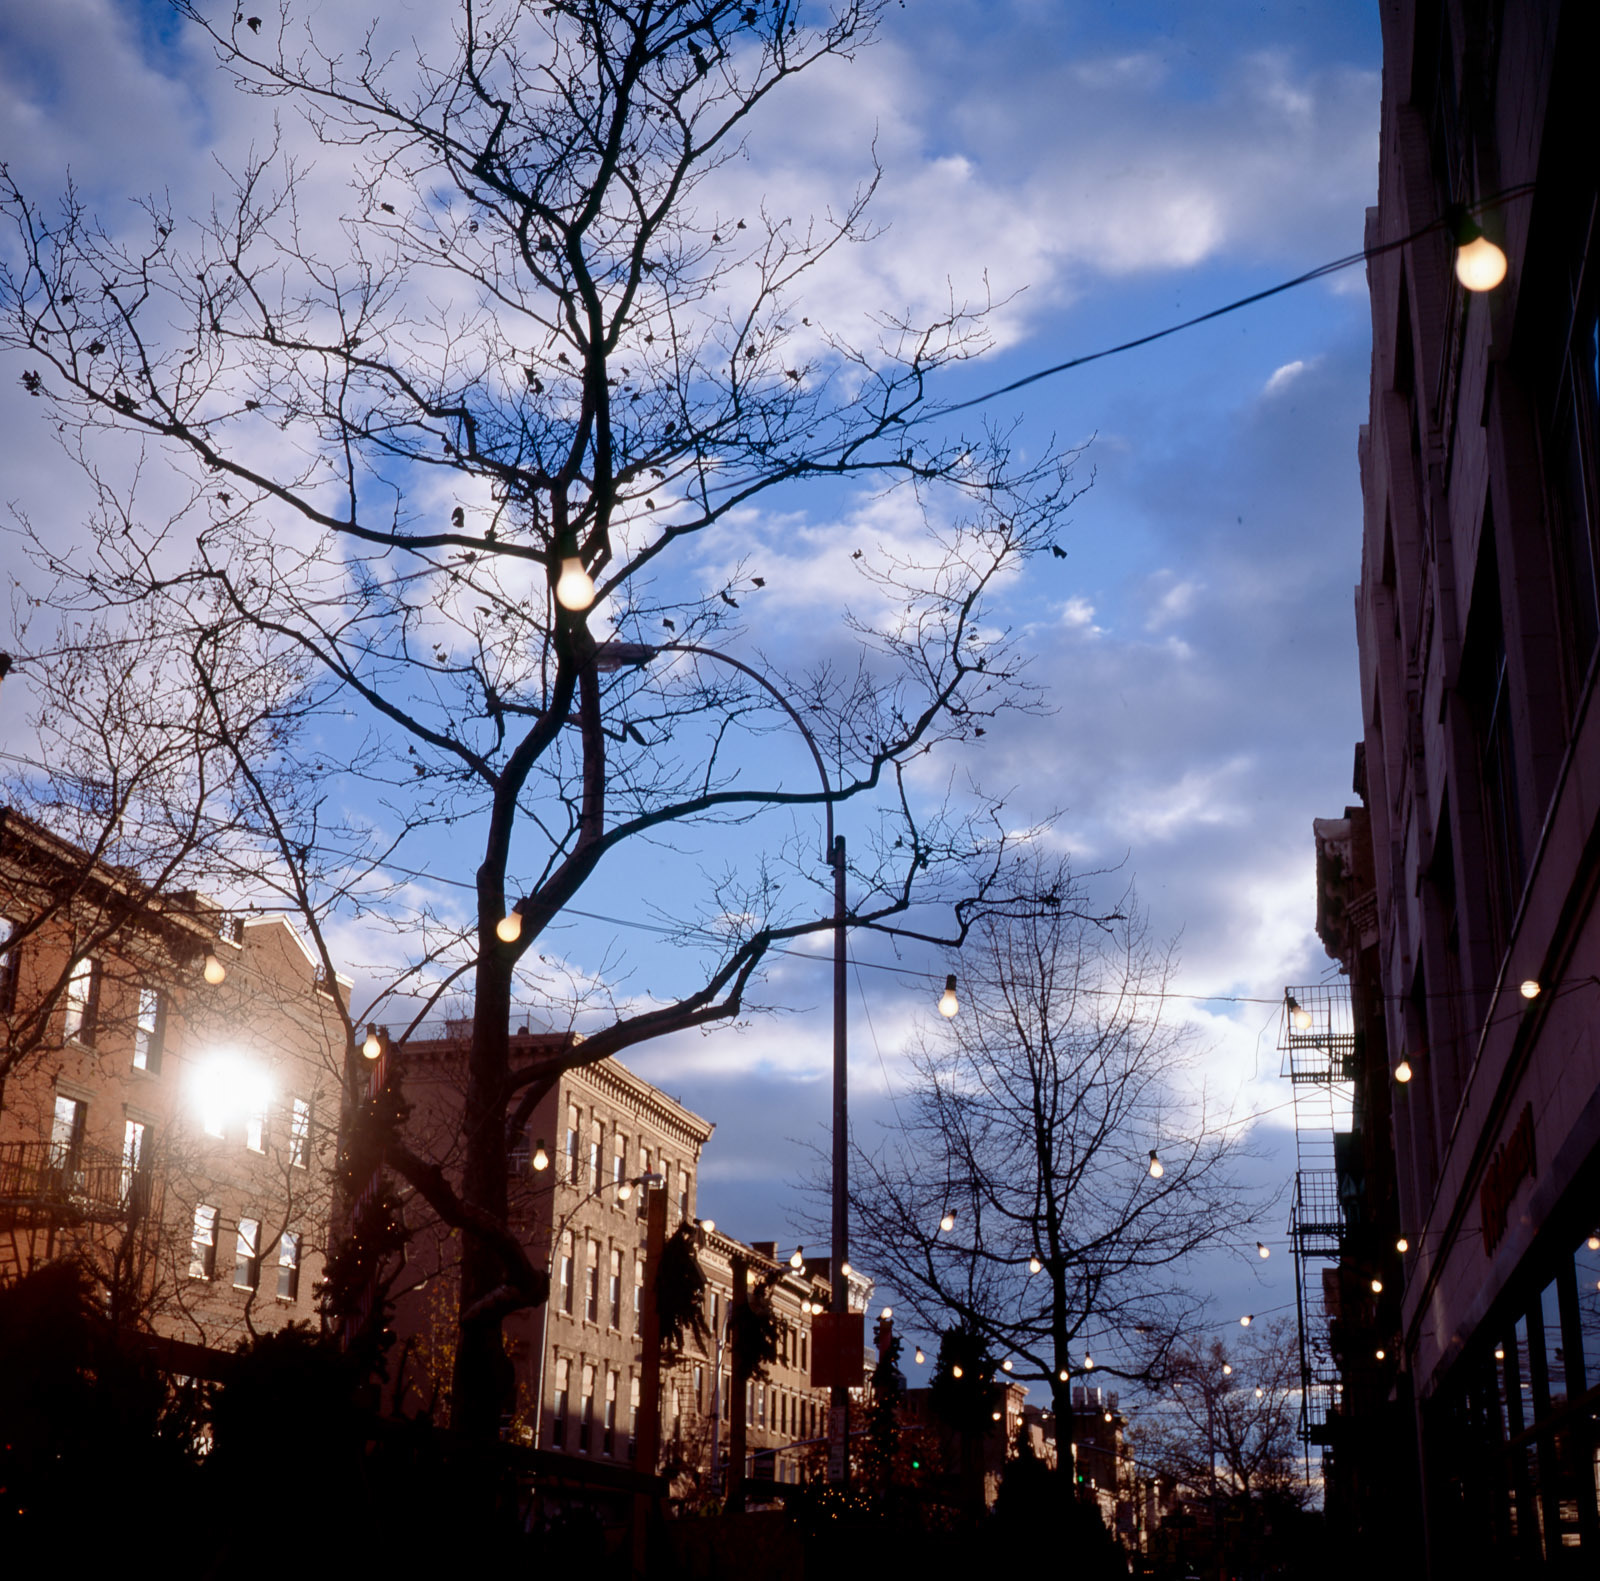 "Court Street Lights" Brooklyn, NY 2011